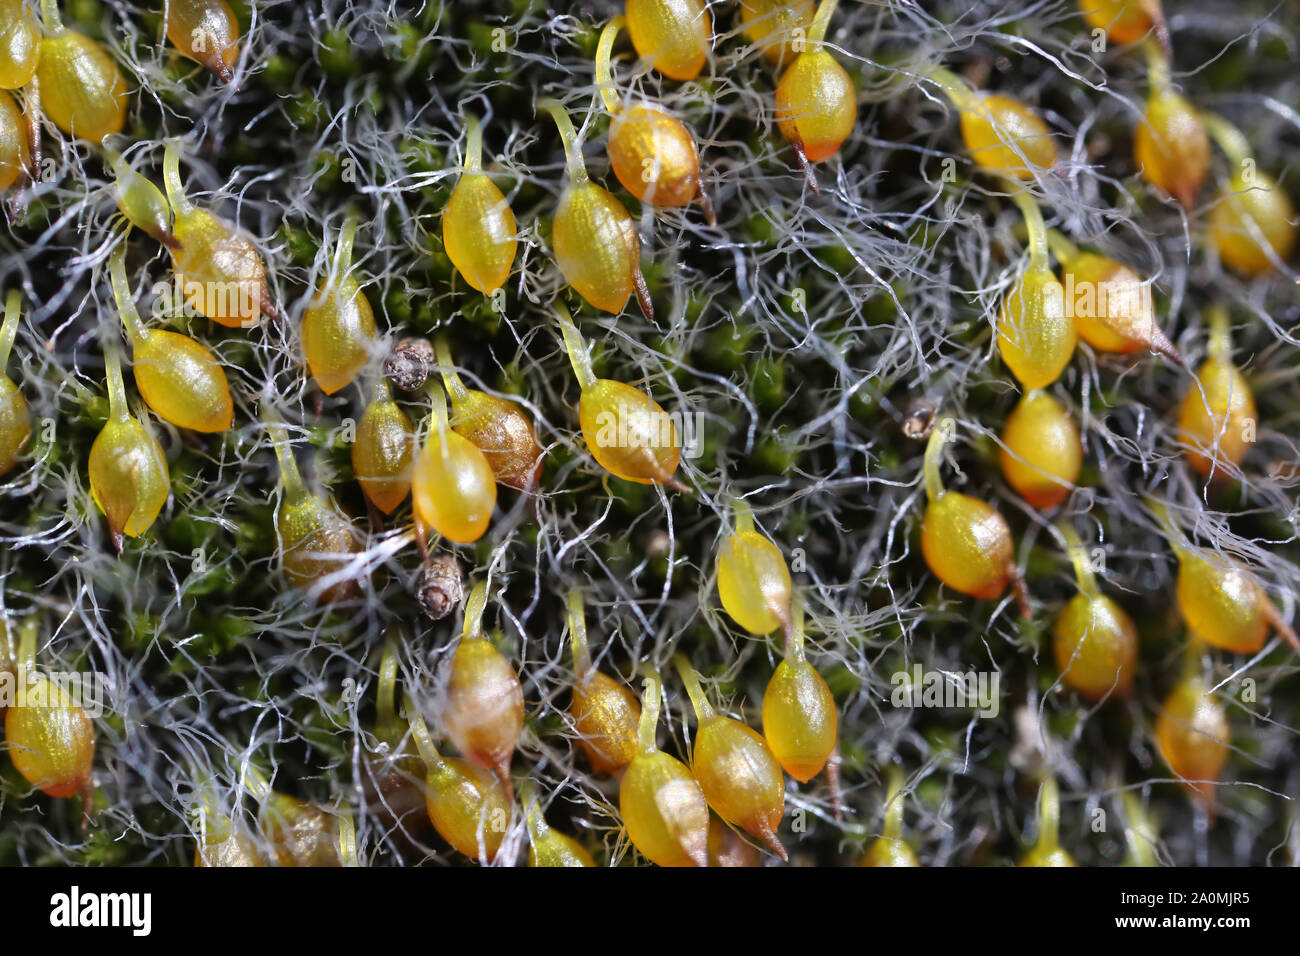 Grimmia pulvinata - wild moss Stock Photo